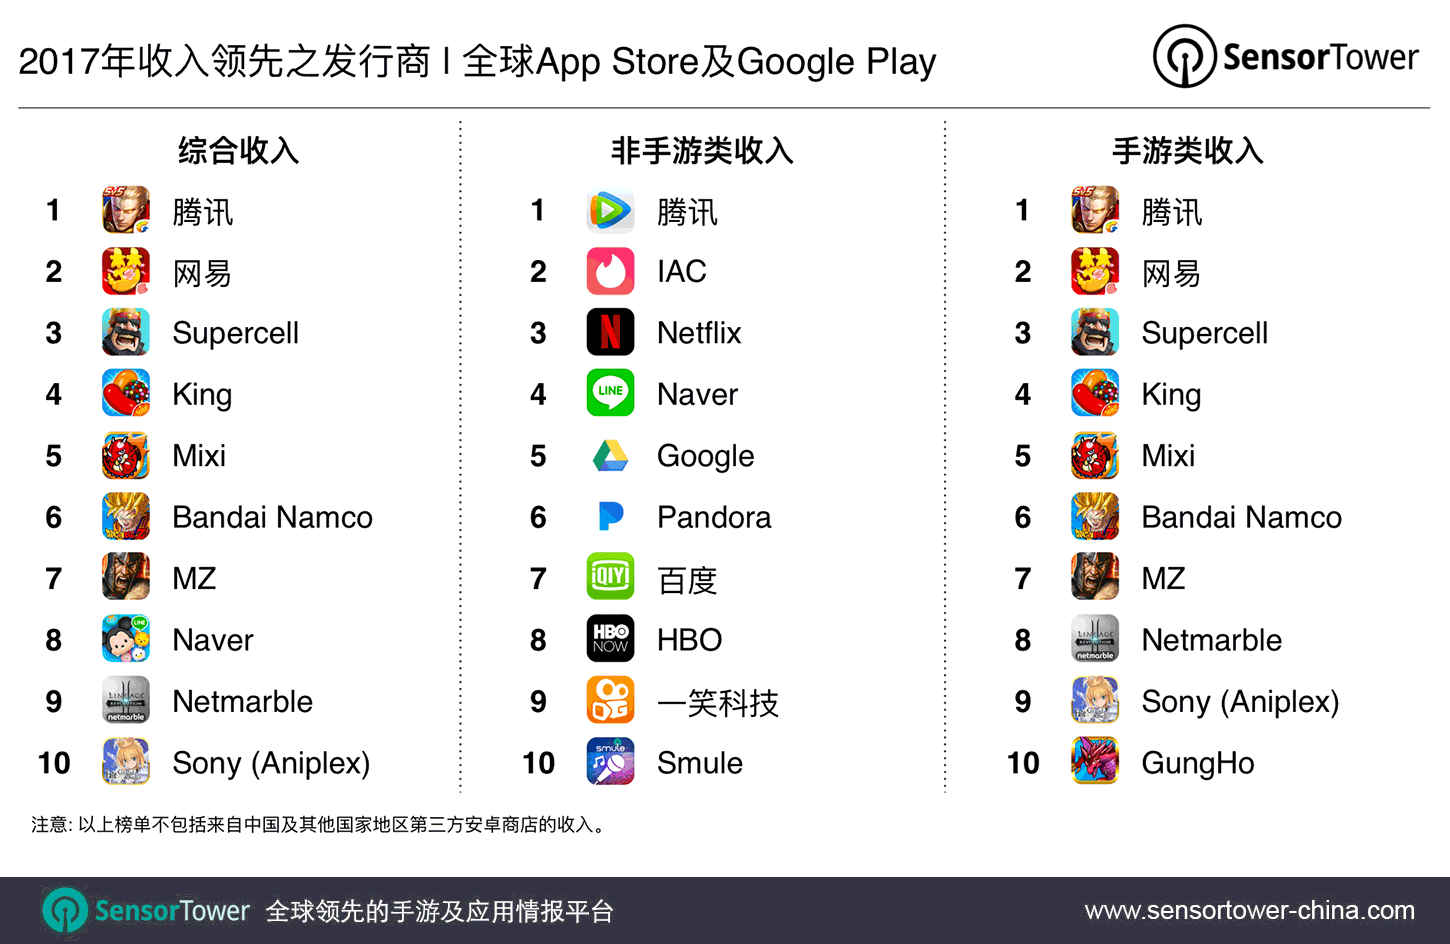 2017's Top Mobile App Publishers by Revenue CN